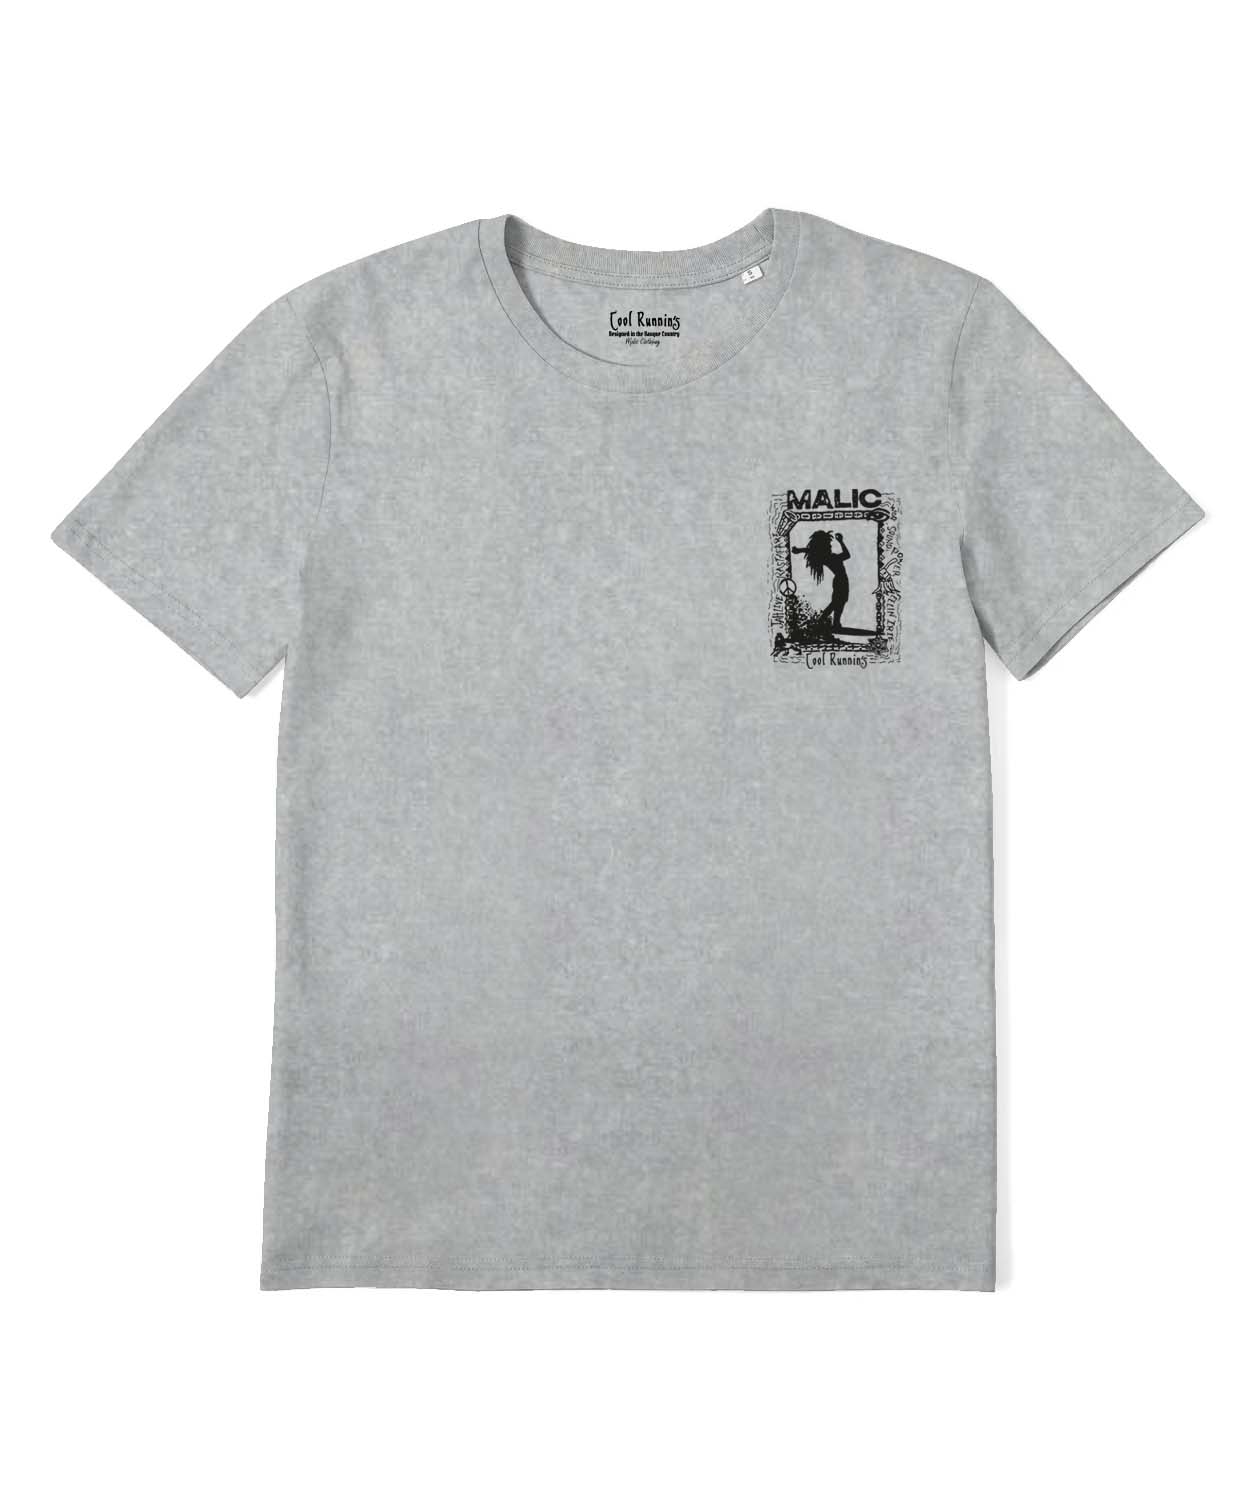 Camiseta COOL RUNNIN'S gris vintage